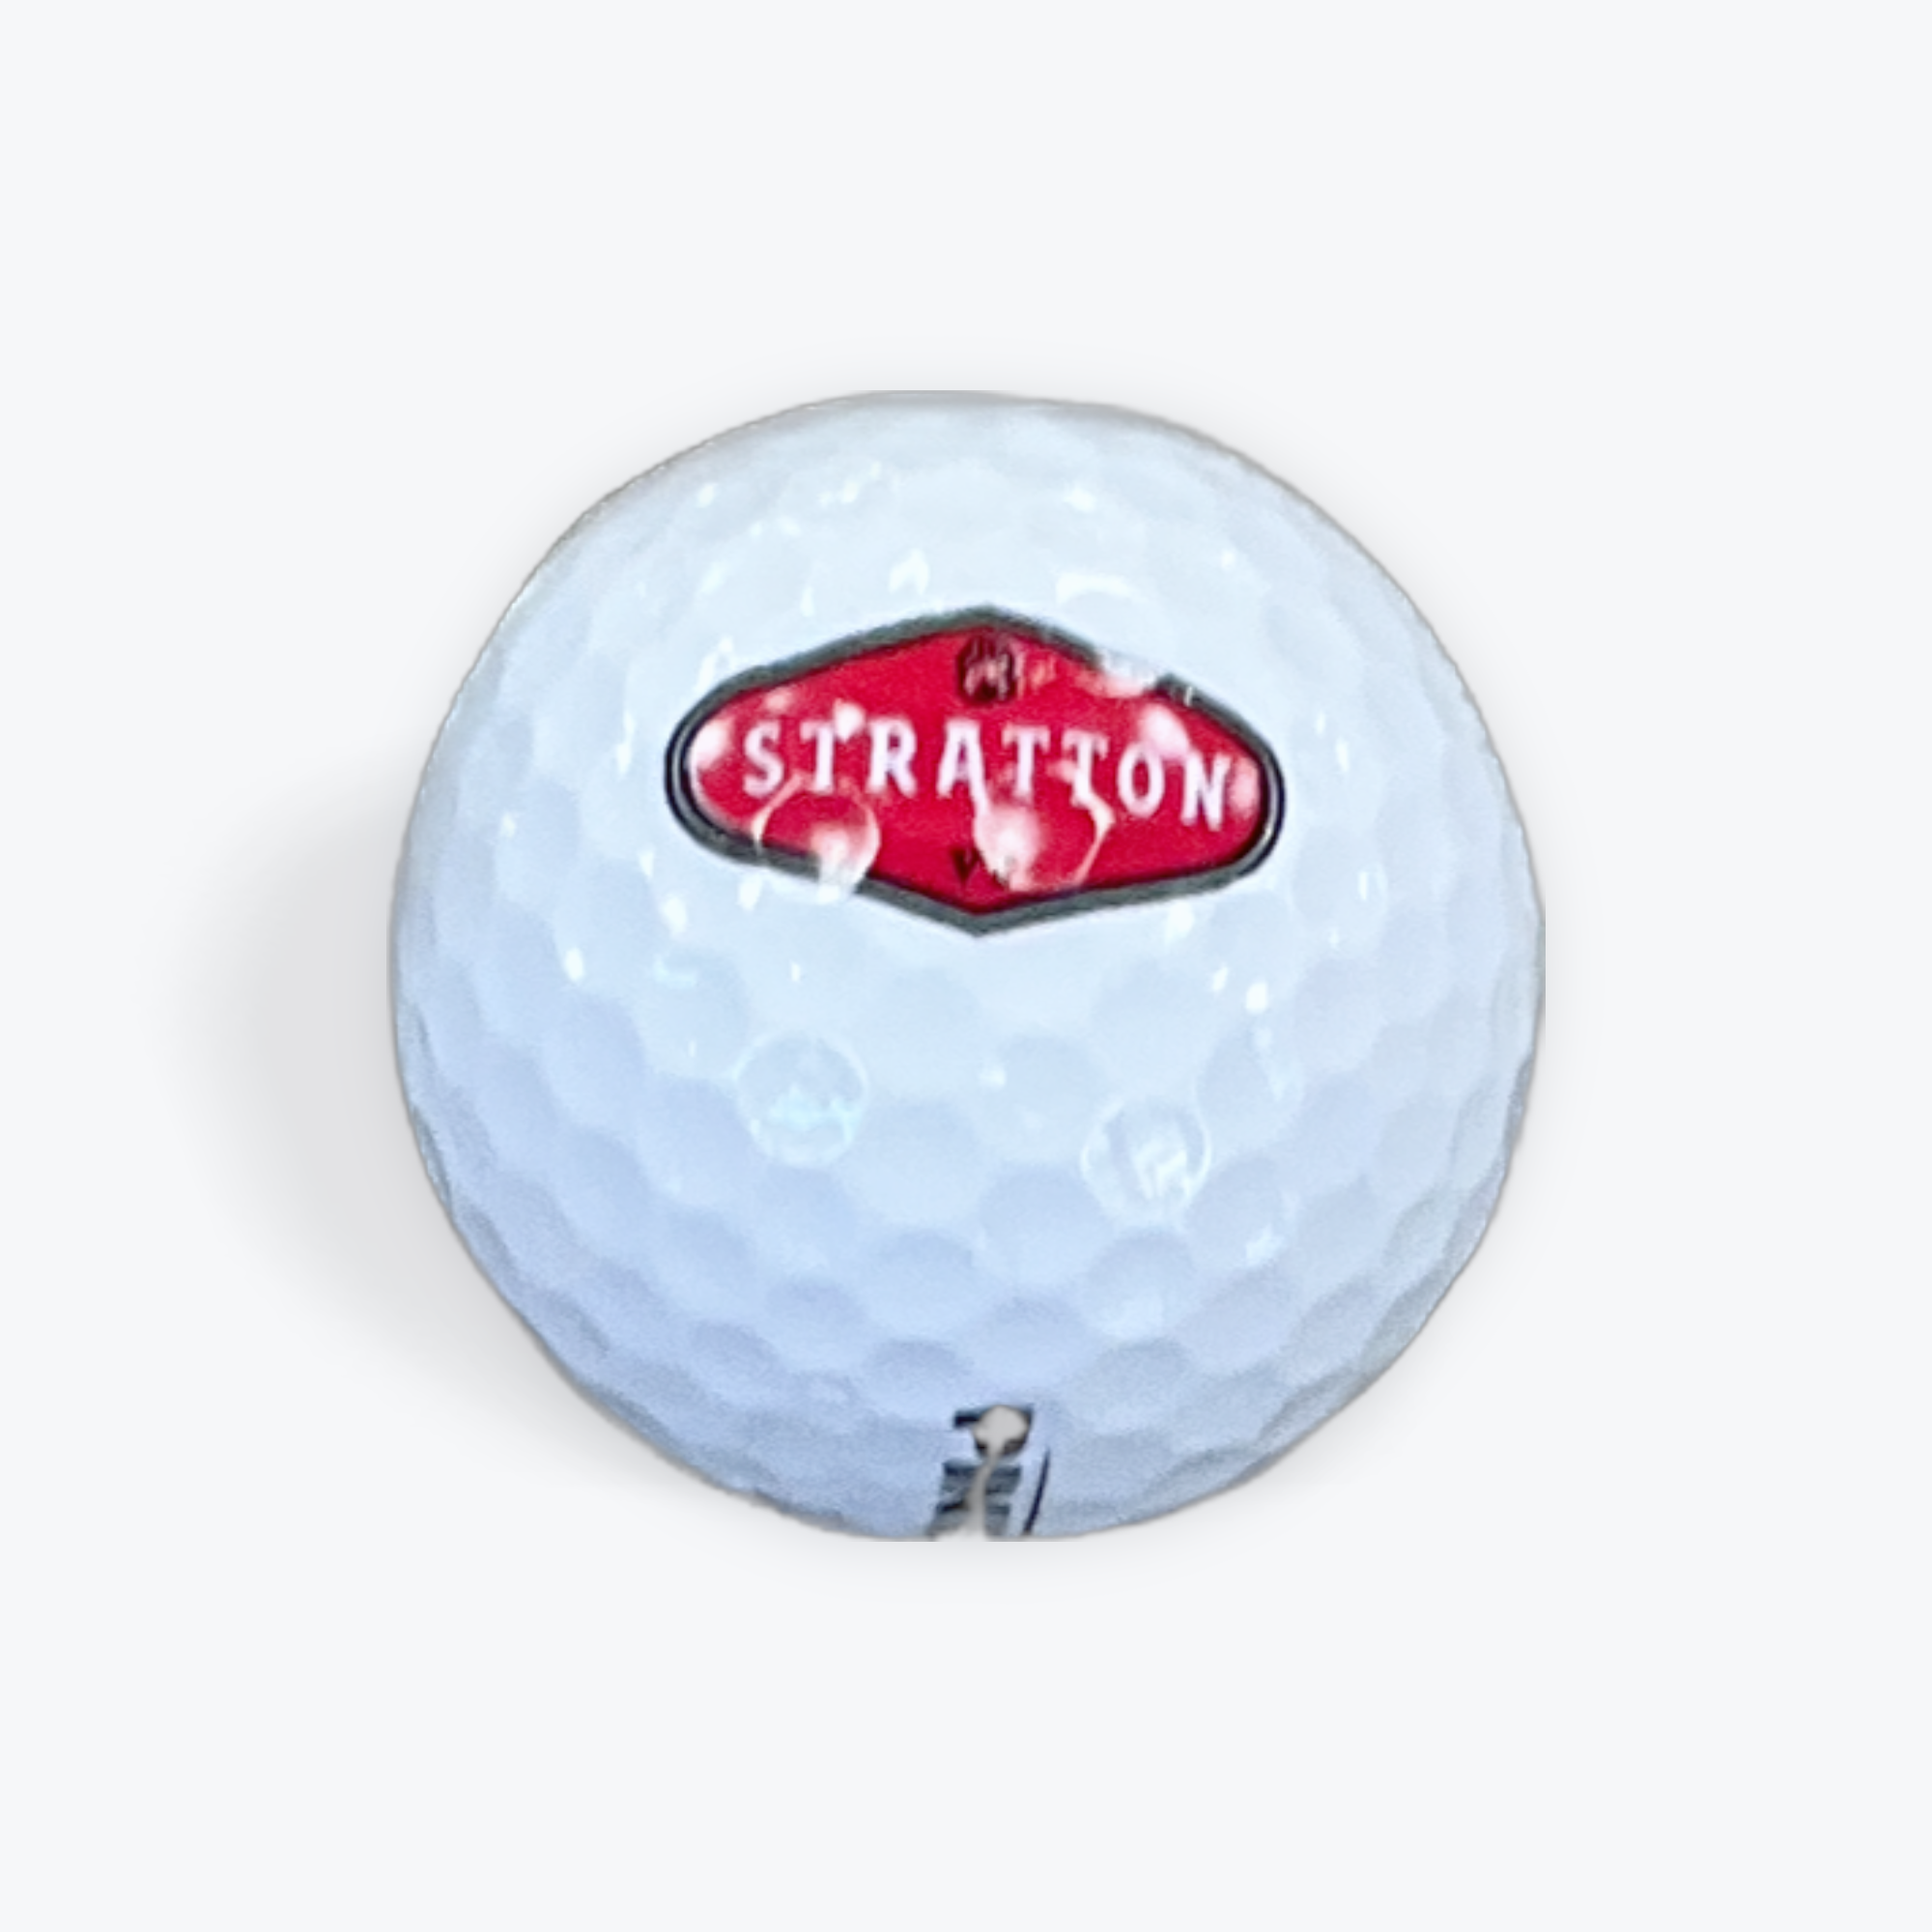 Stratton Golf Ball